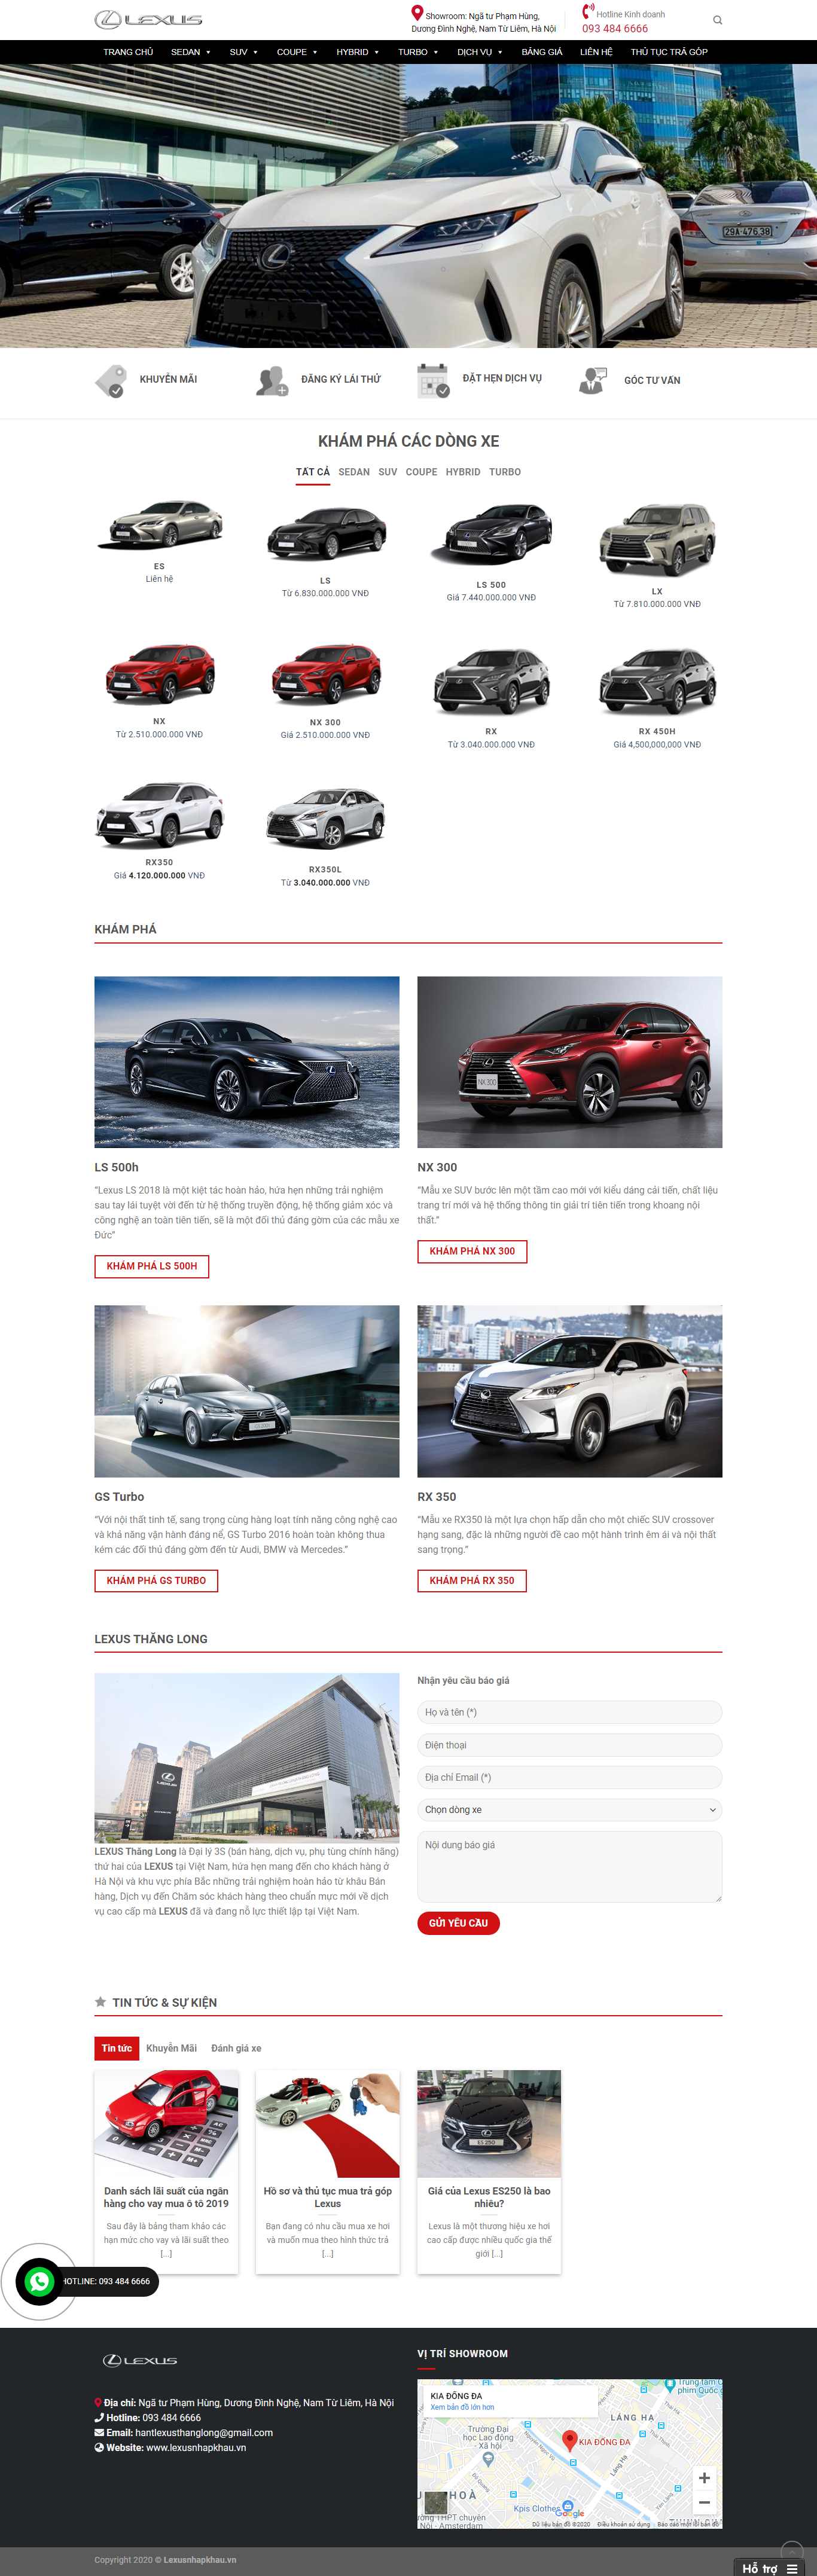 Thiết kế Website bán xe hơi - lexusnhapkhau.vn